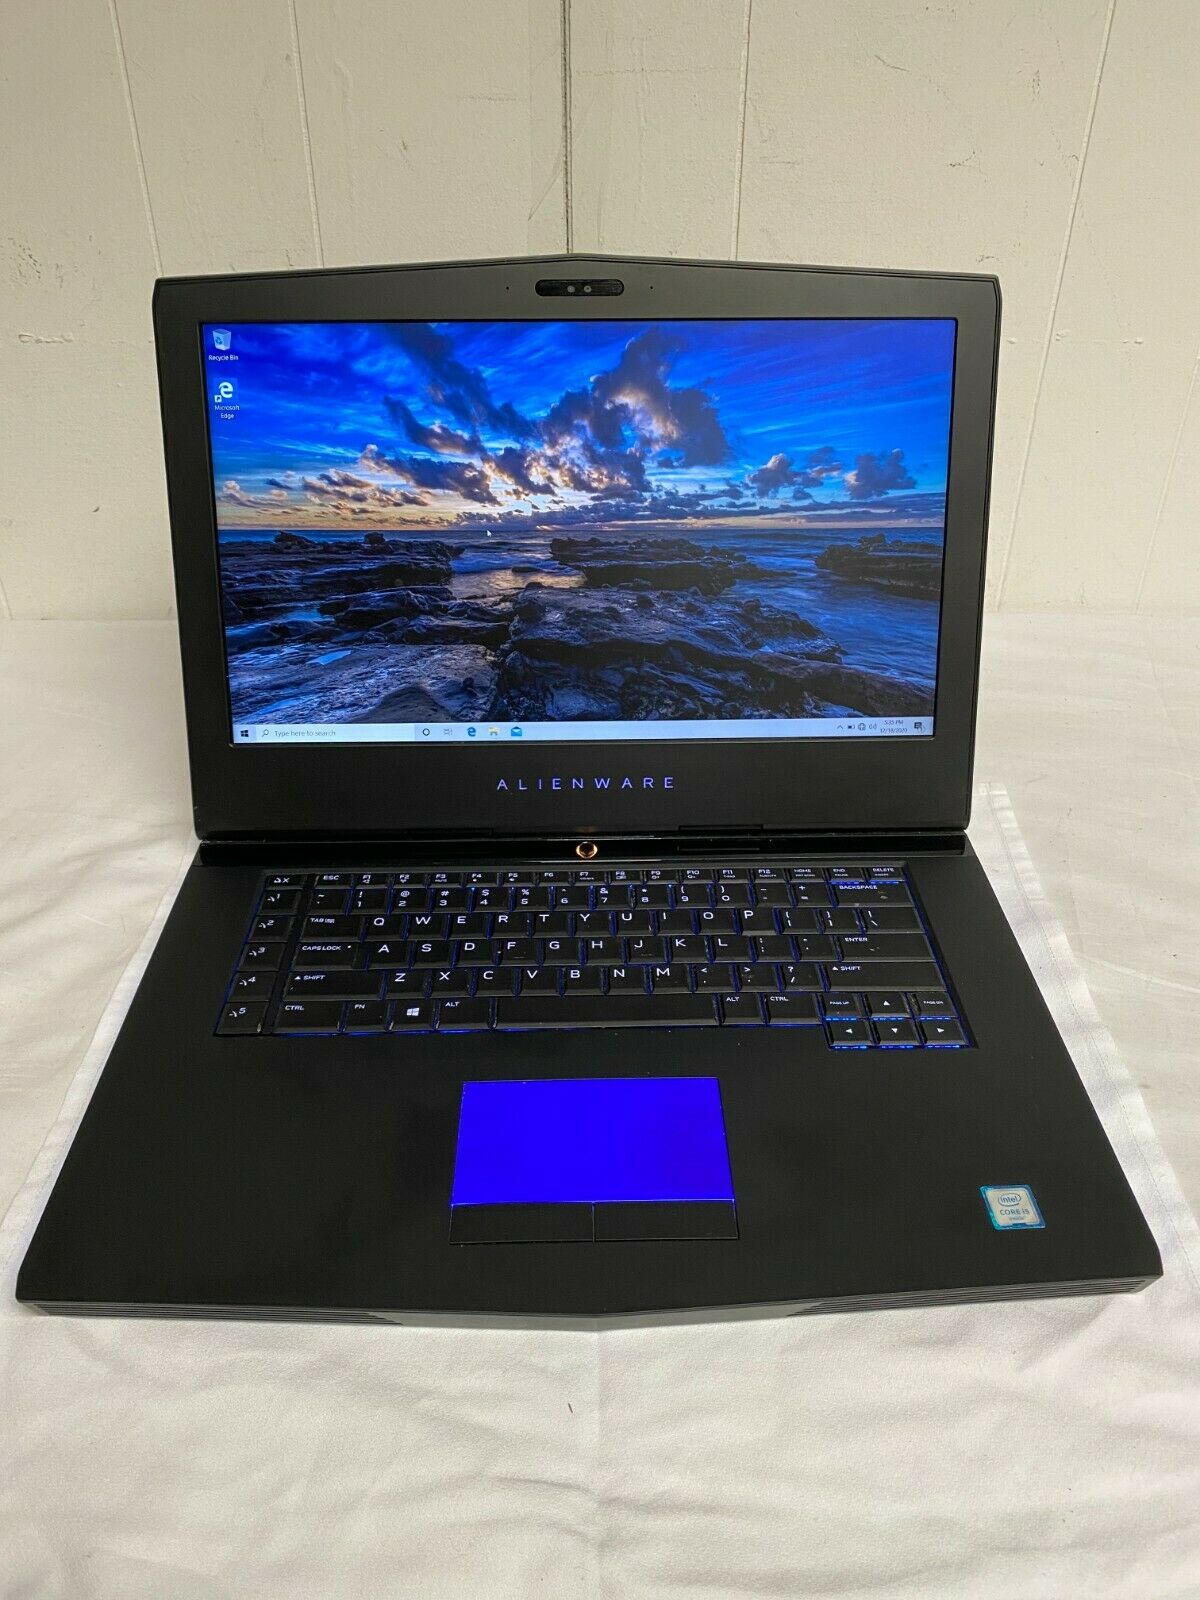 Alienware 15 R3 Gaming Laptop 1TB 8GB Ram i5-6300HQ 2.30GHz